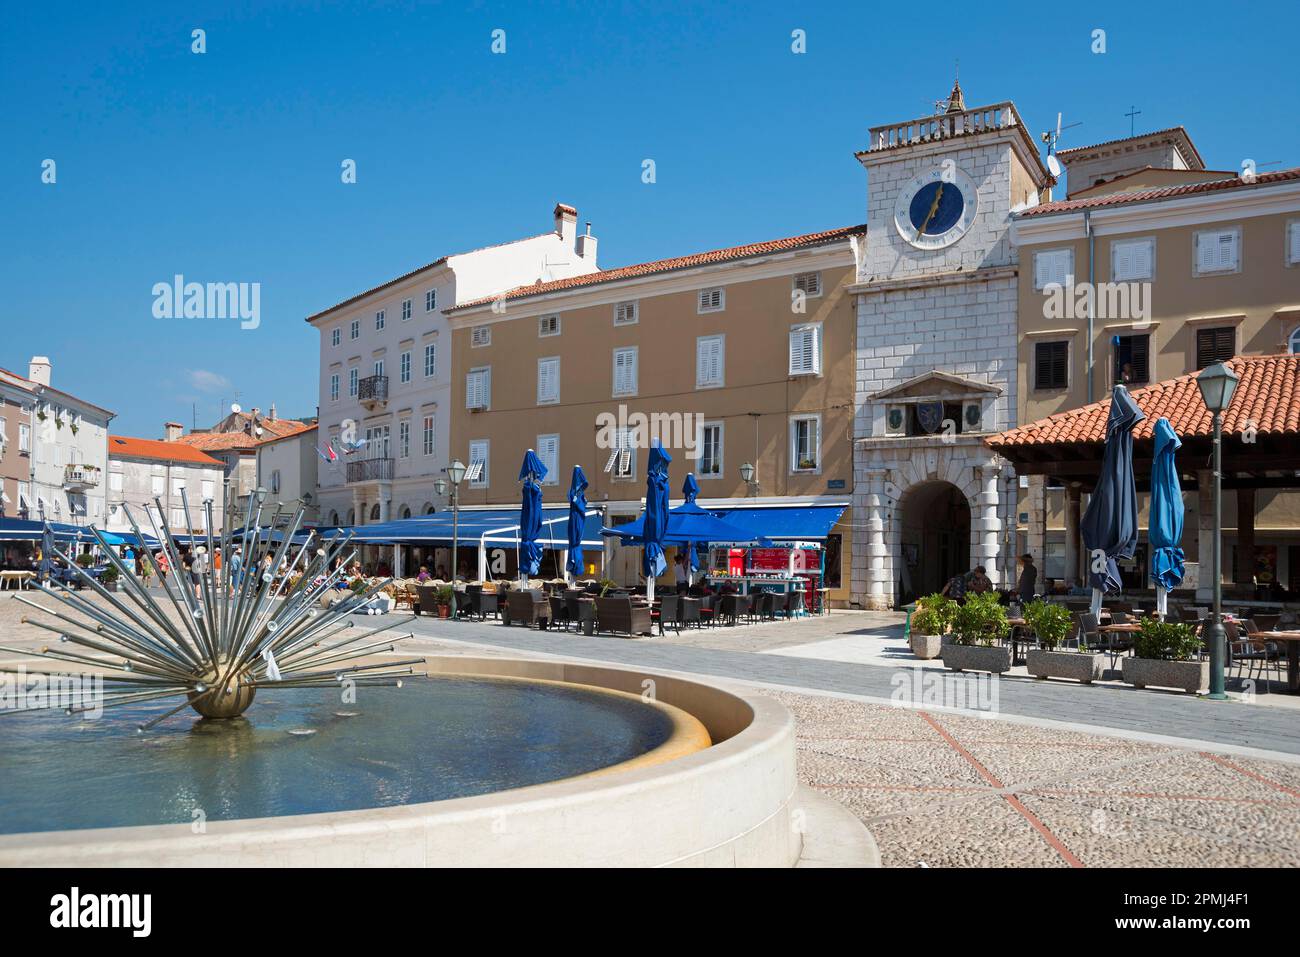 Fountain and sea gate, Trg Petrica square, Cres Town, Cres Island, Kvarner Gulf Bay, Croatia Stock Photo